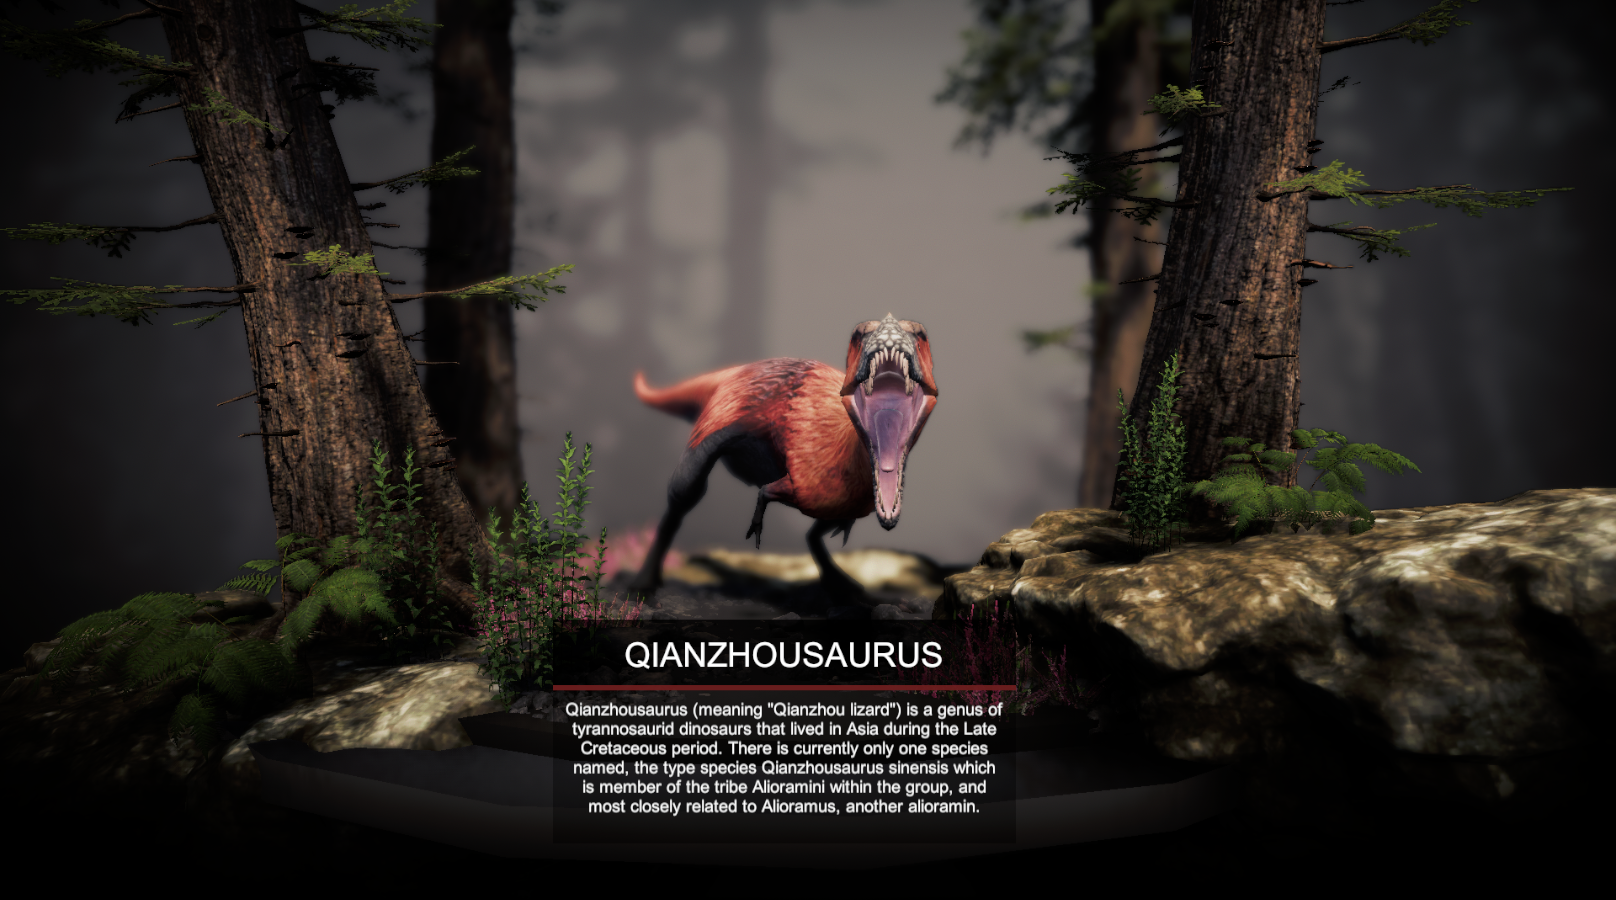 Steam Community :: Dinosaurs A Prehistoric Adventure